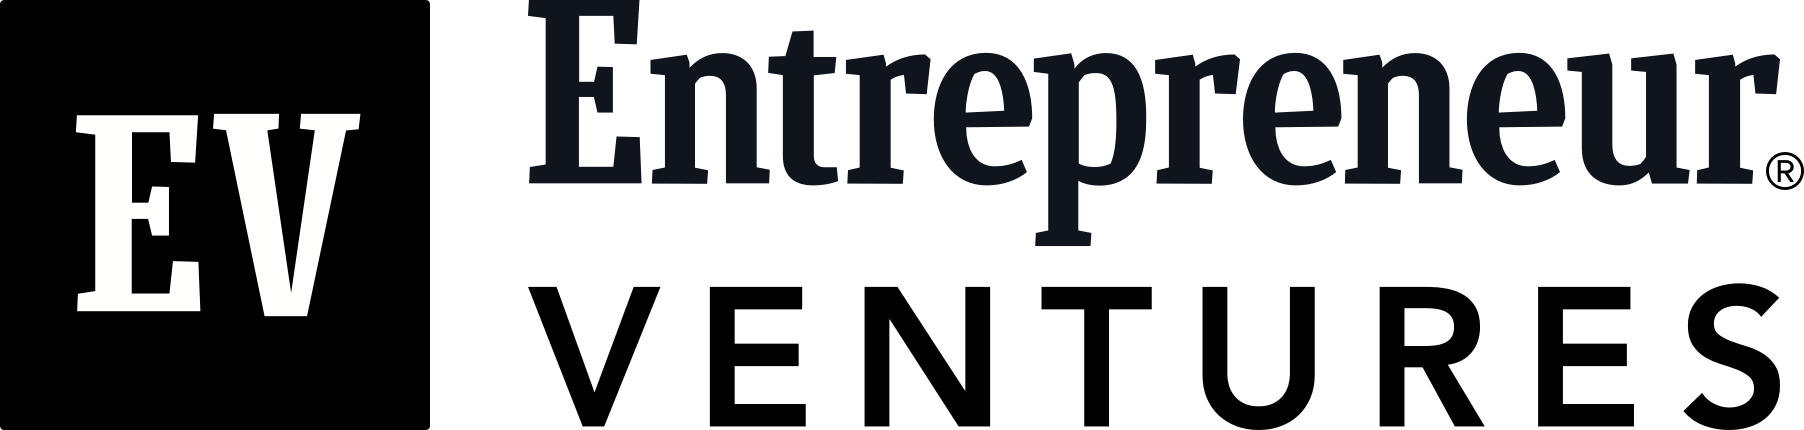 Entrepreneur Media Teams with Veteran VCs and Founders to Launch Entrepreneur Ventures